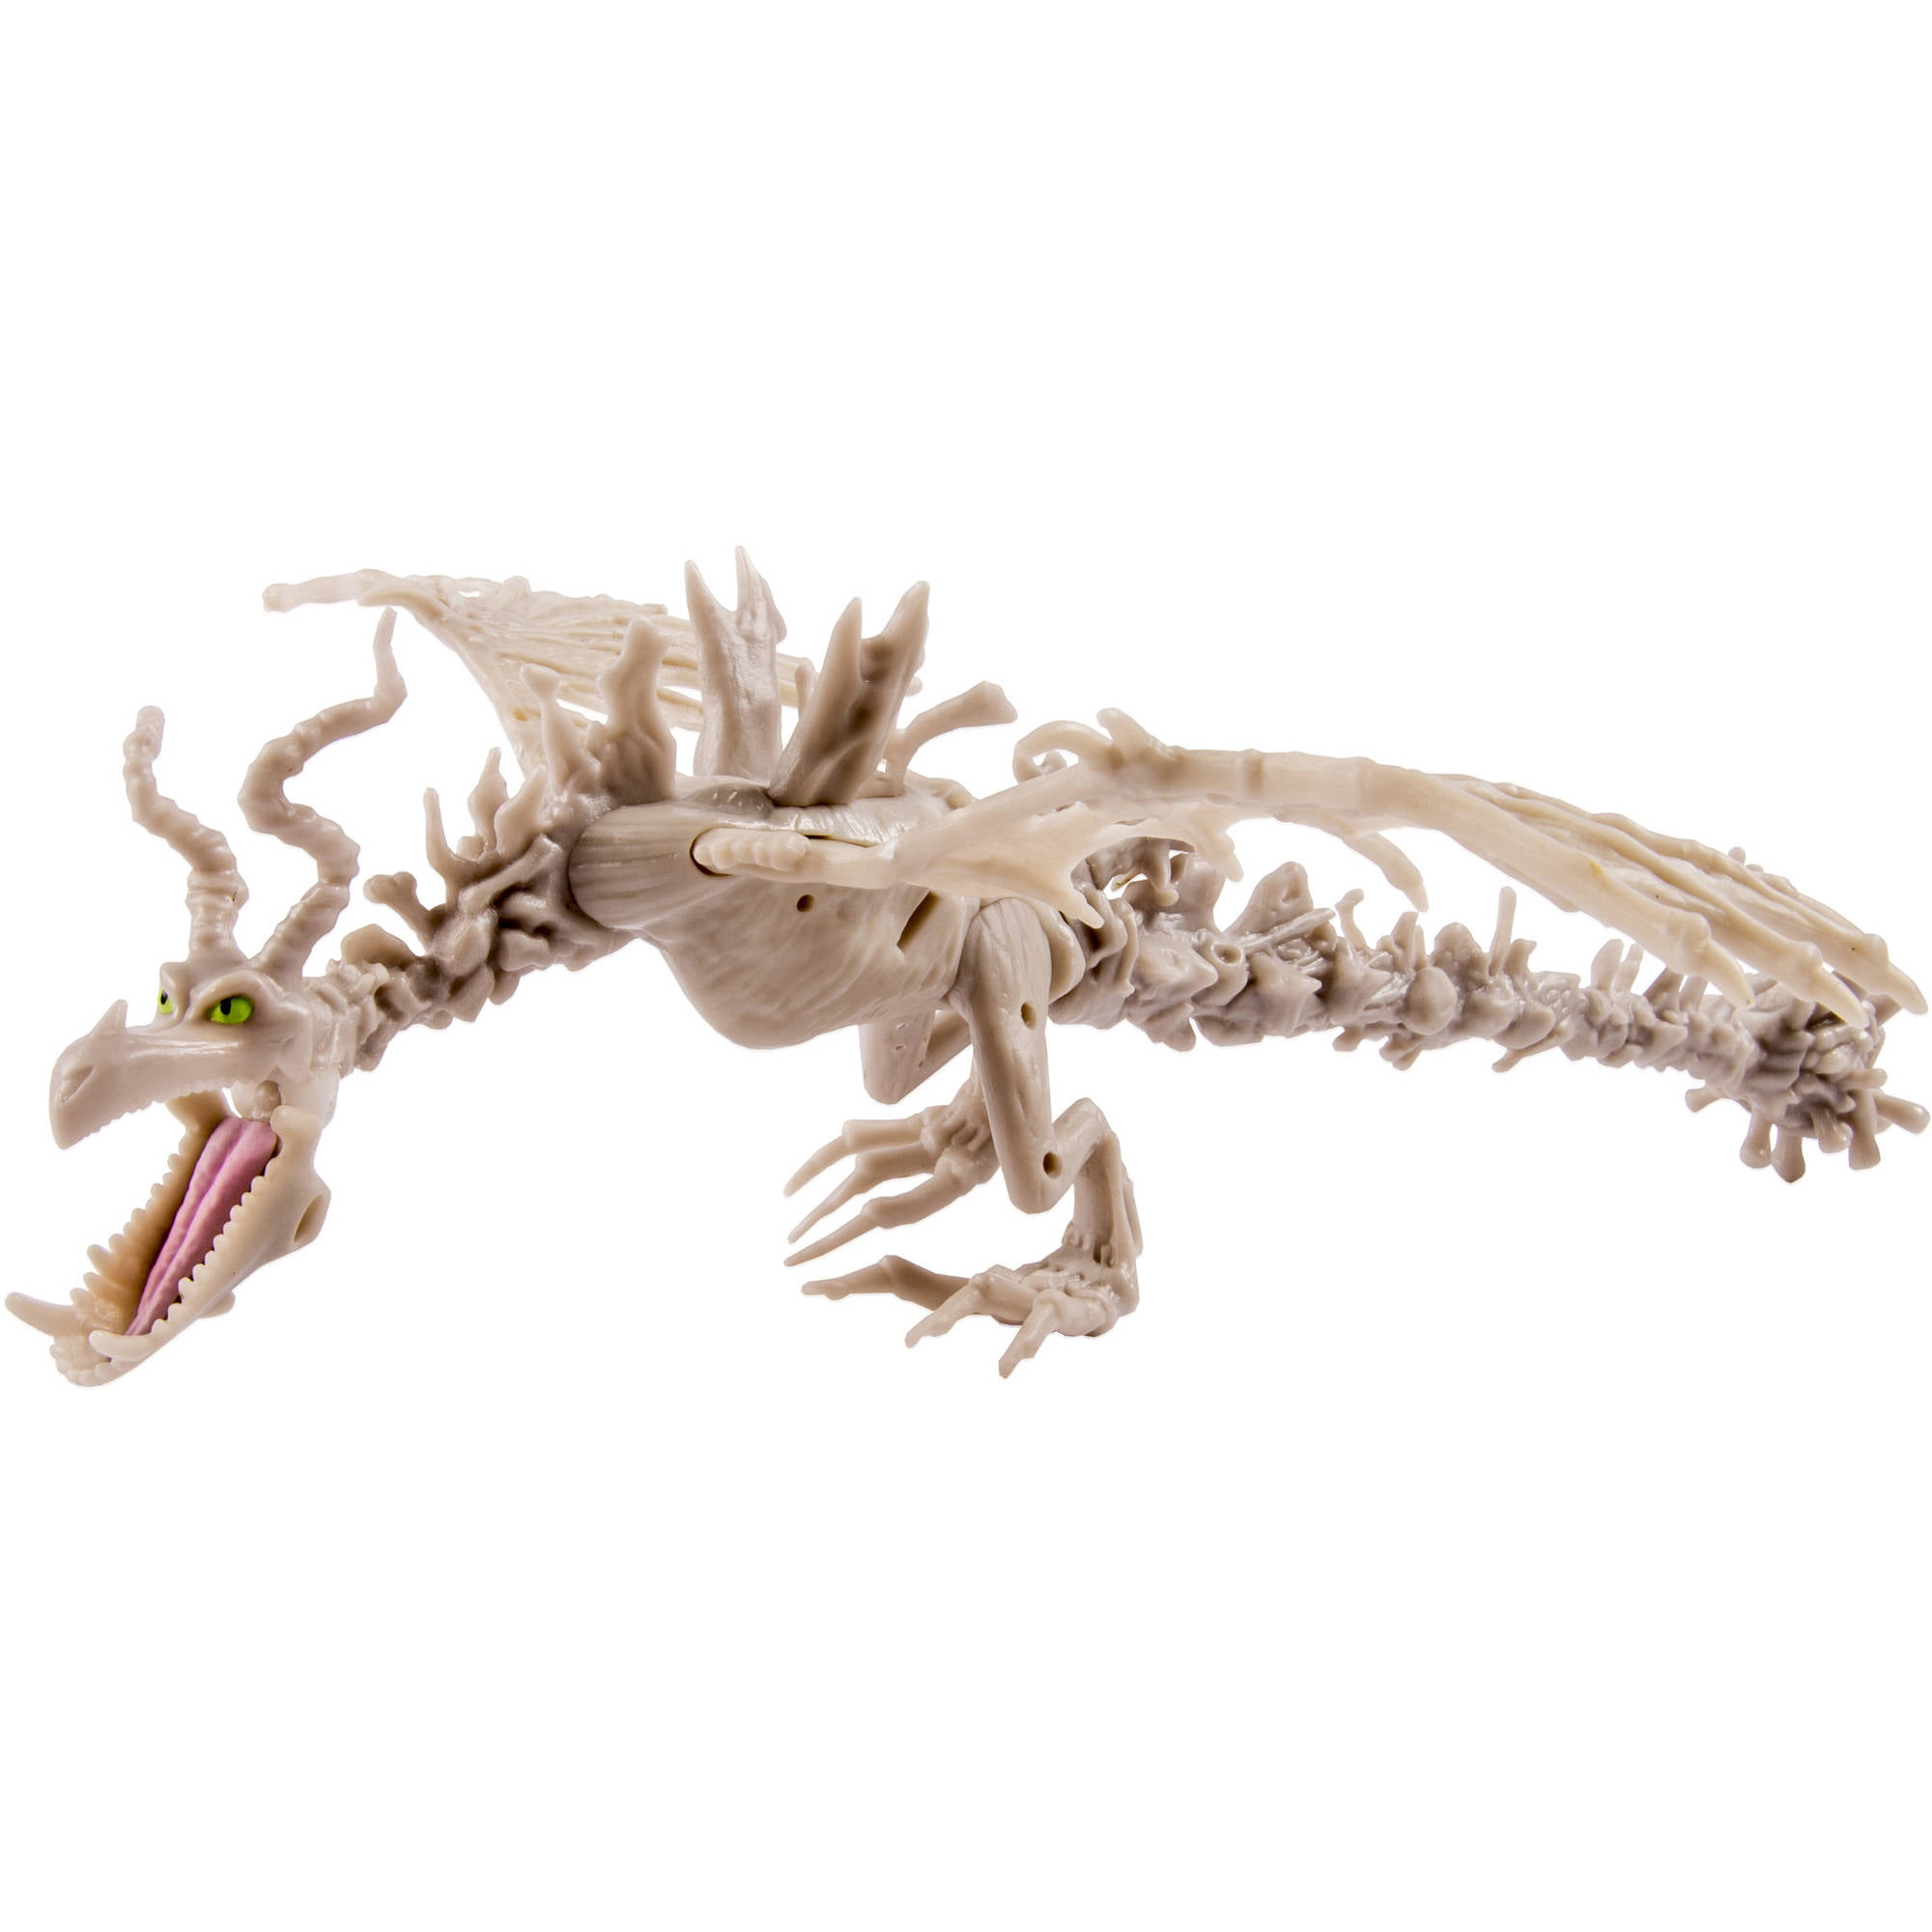 boneknapper dragon toy